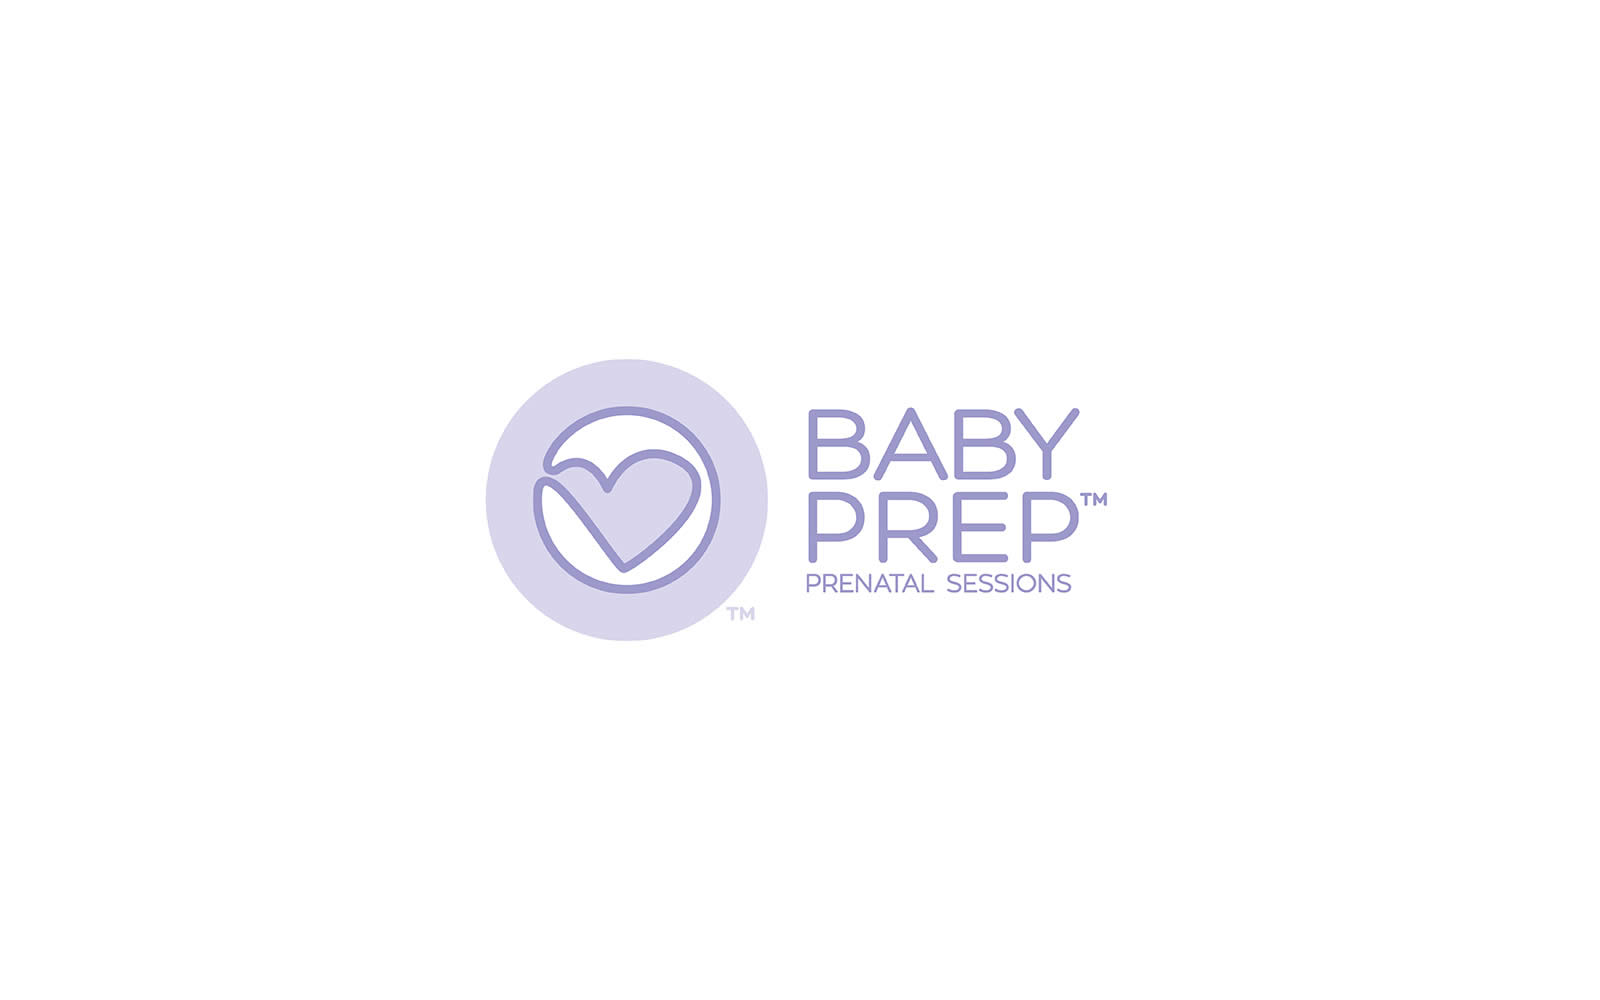 Baby Prep™ New logo and wordmark design.